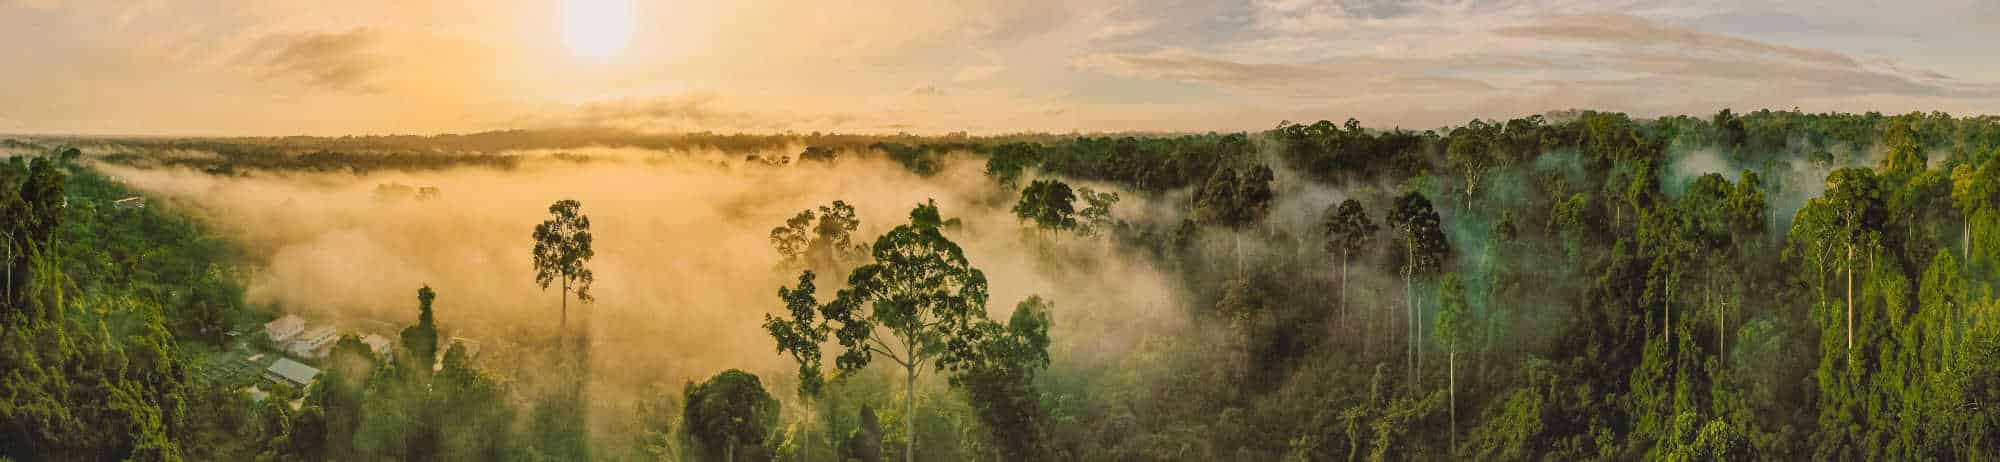 image of borneo rainforest